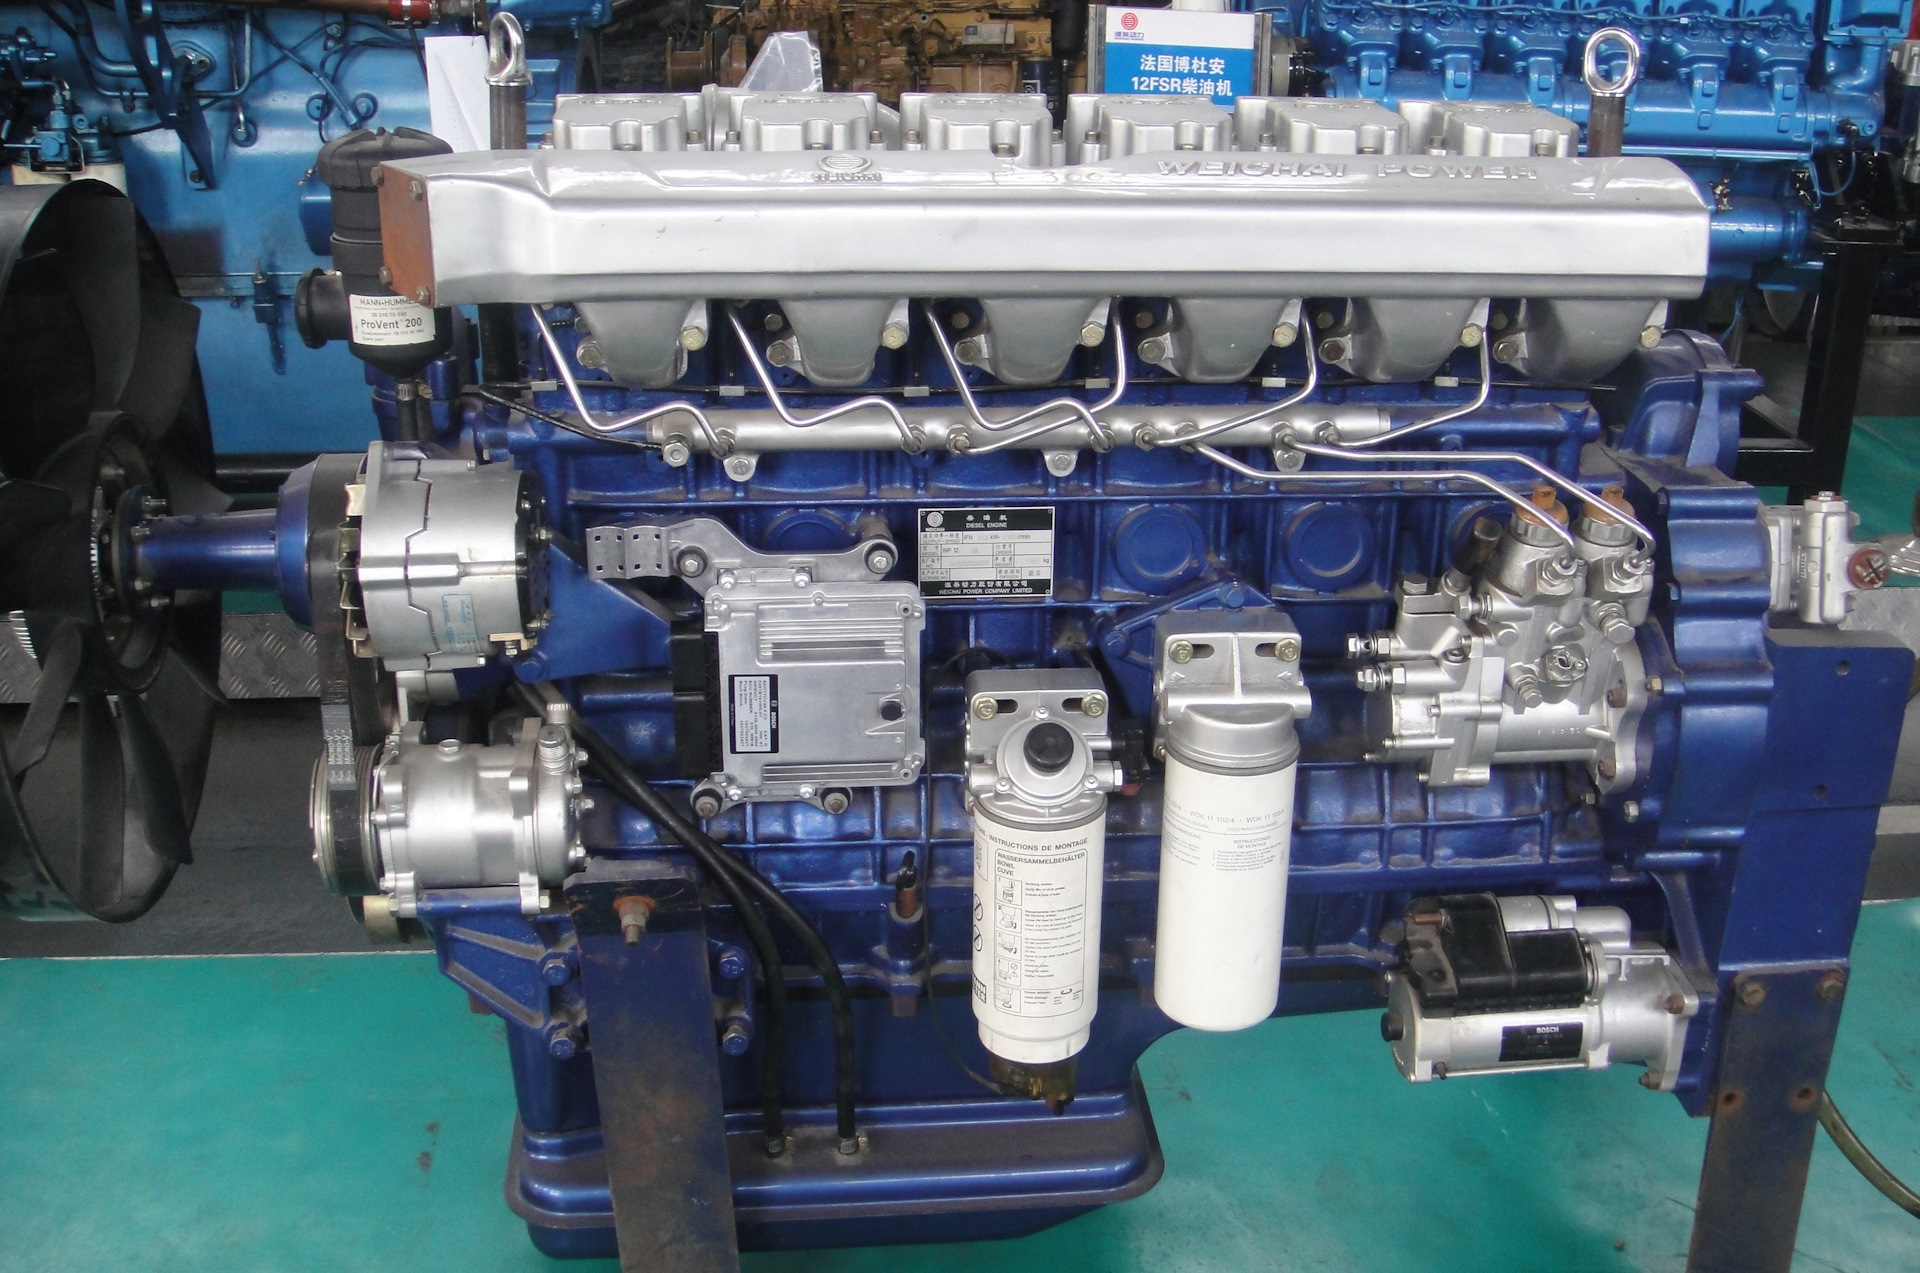 Тутай двигатель. Двигатель Weichai wp12. Weichai двигатель wp12 компрессор. Wp12.430e50. Weichai wp12.430e50.